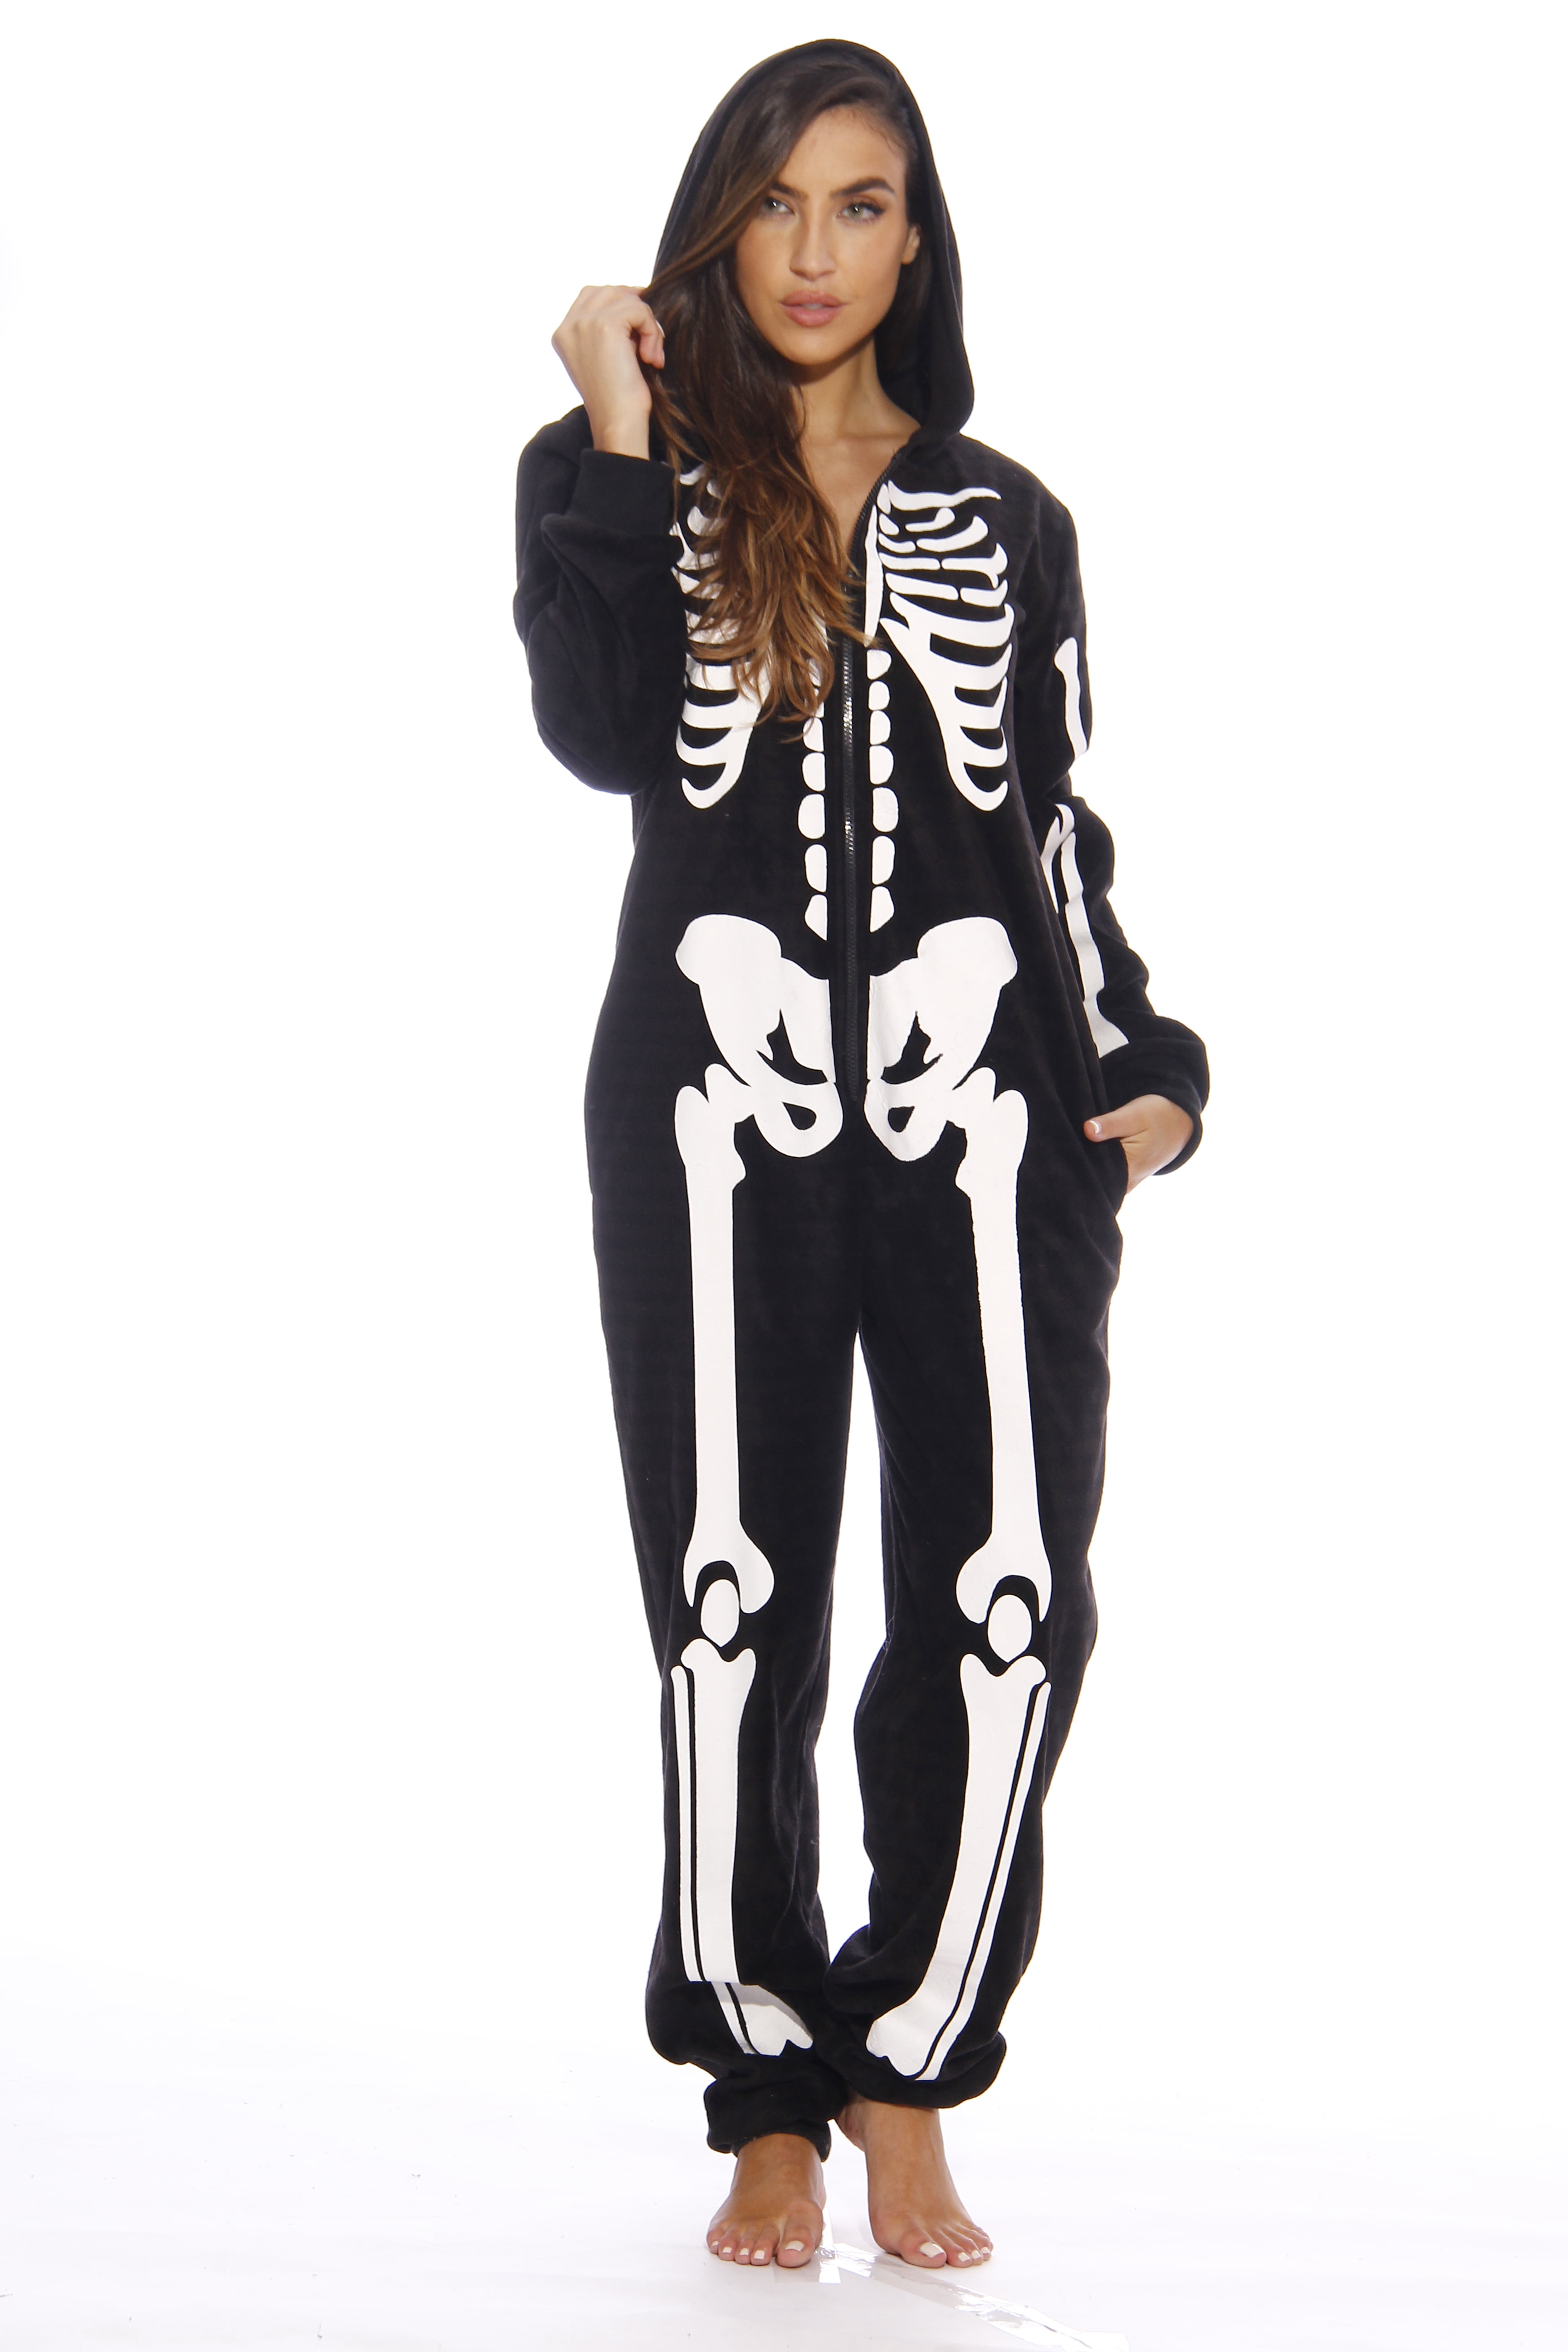 Unisex jumpsuit Plush Pajamas Onesie Adult Women's Skeleton Halloween Costume Cozy One Piece Cosplay Costumes for Women